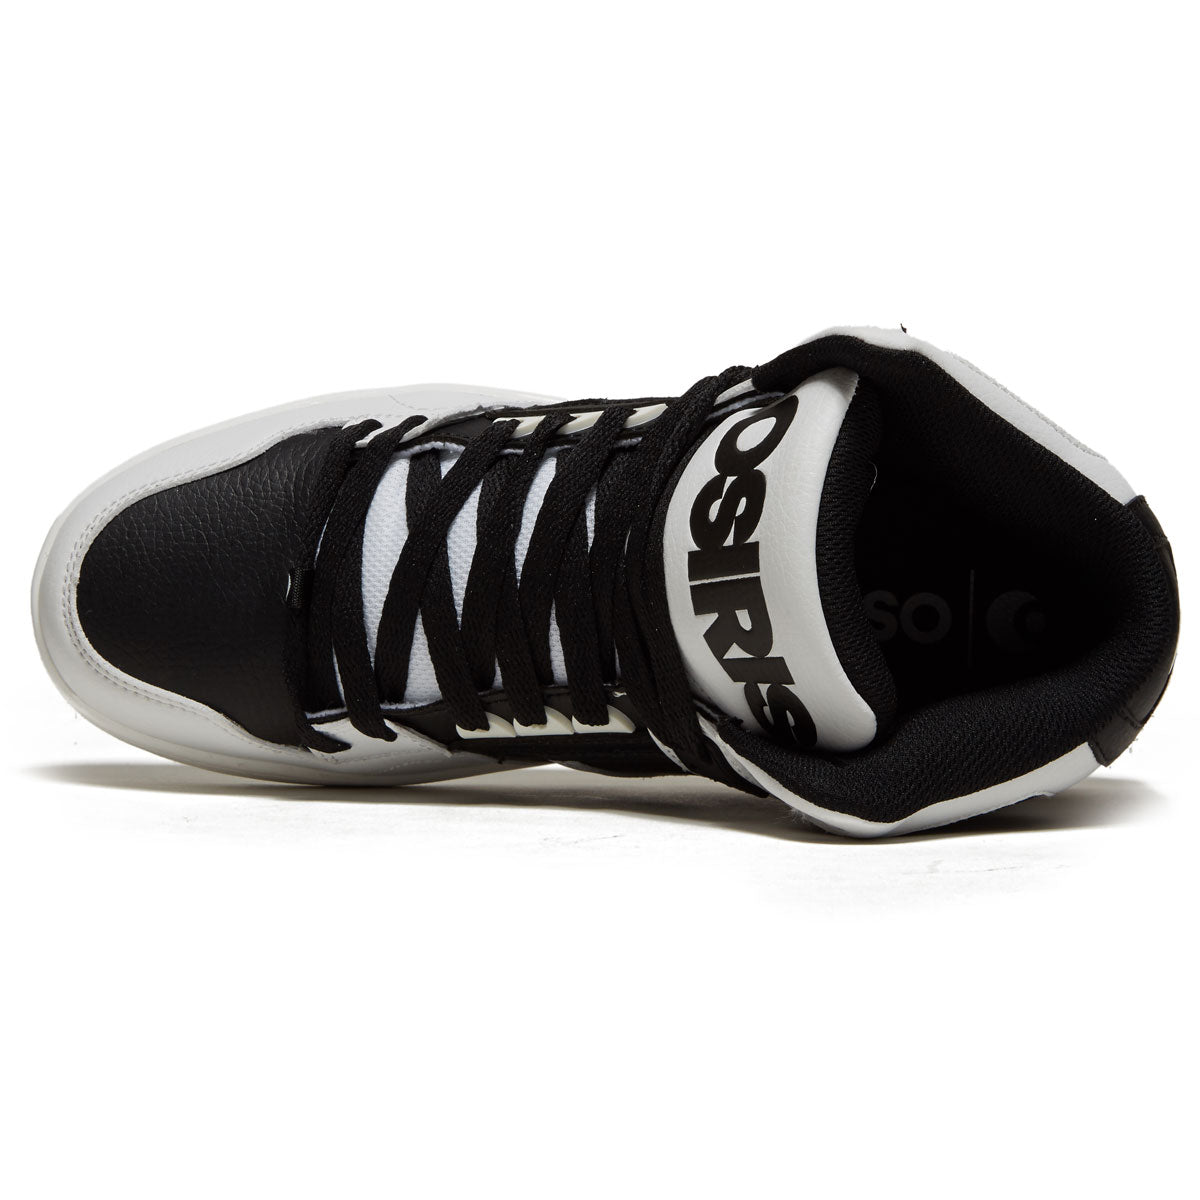 Osiris Nyc 83 Clk Shoes - White/Black image 3